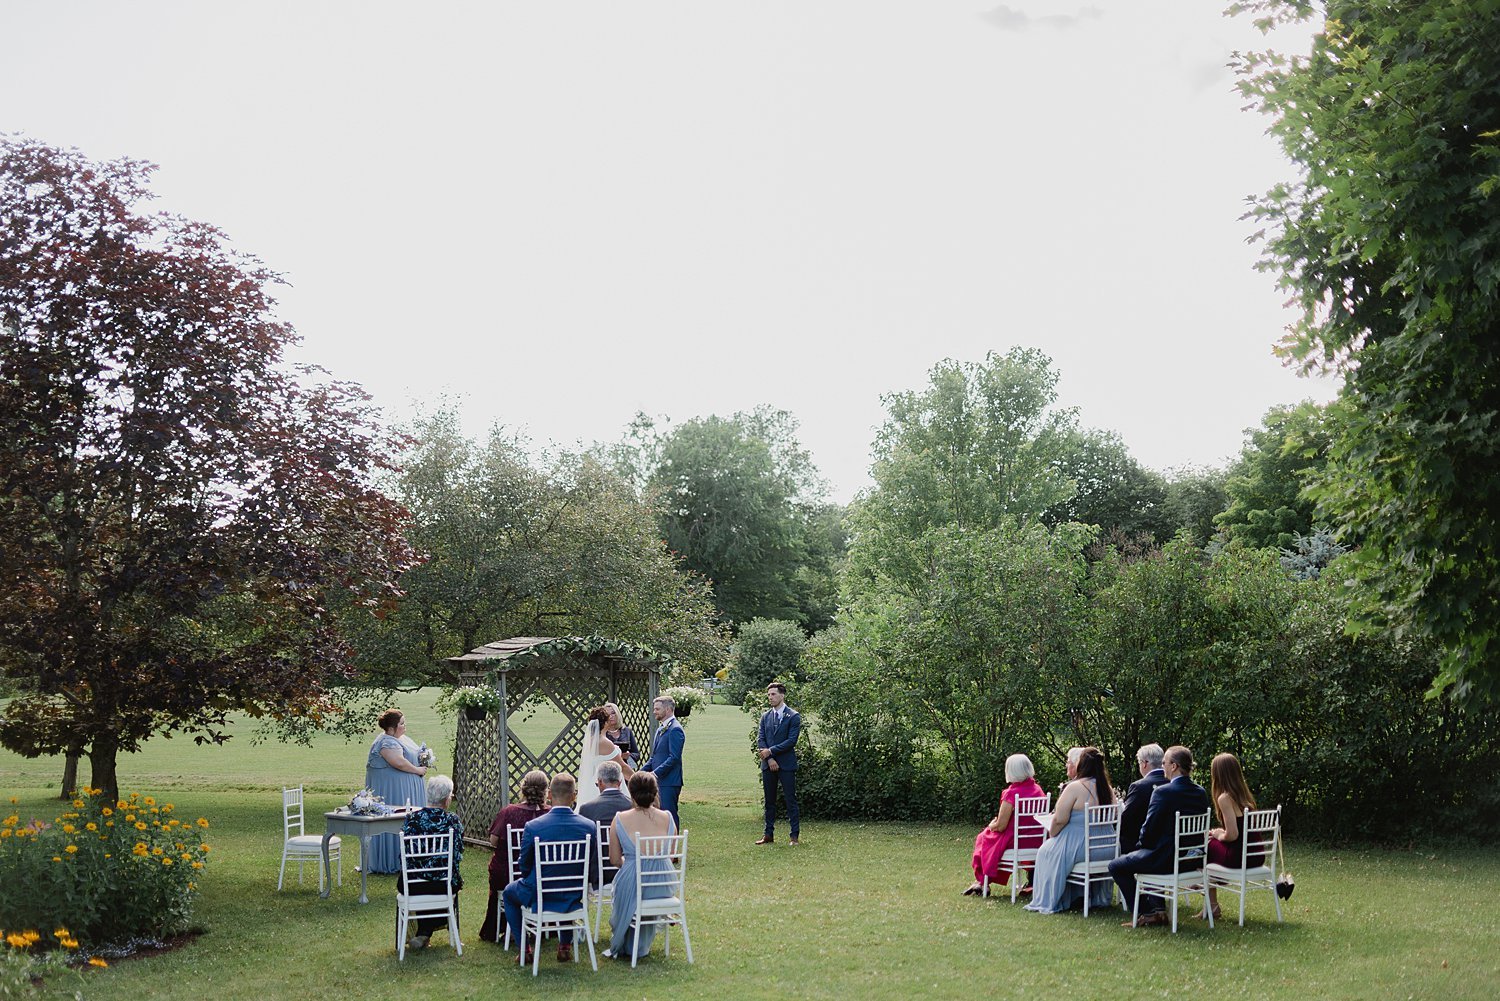 Elegant Summer Backyard Tented Wedding in Sydenham, Ontario | Prince Edward County Wedding Photographer | Holly McMurter Photographs_0050.jpg